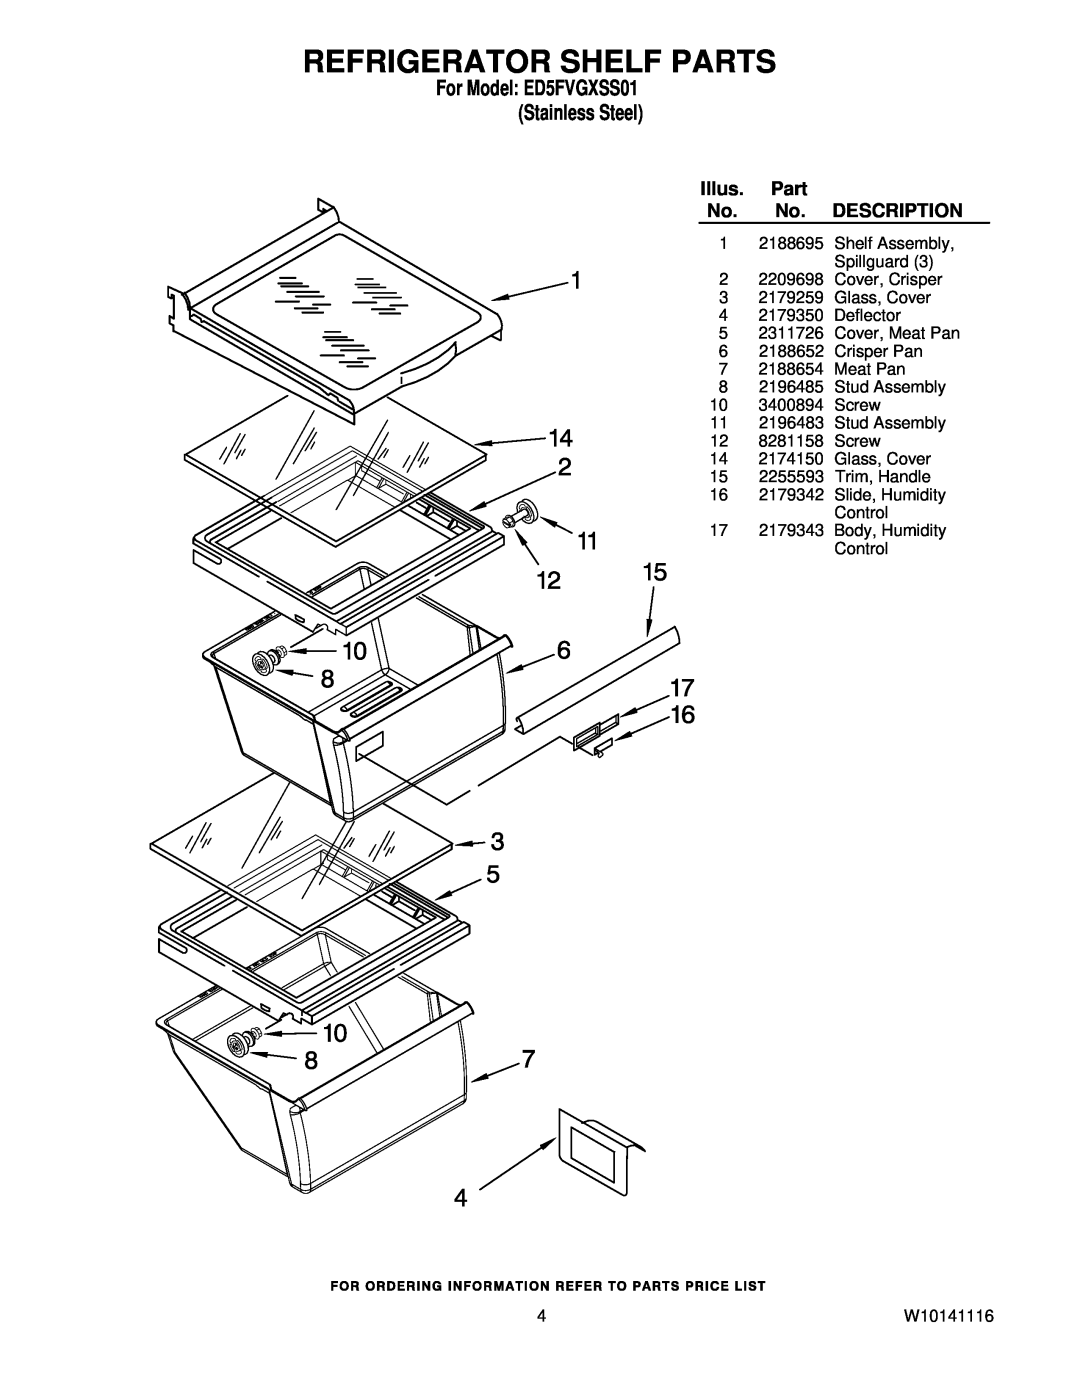 Whirlpool manual Refrigerator Shelf Parts, For Model ED5FVGXSS01 Stainless Steel, Illus, Description 